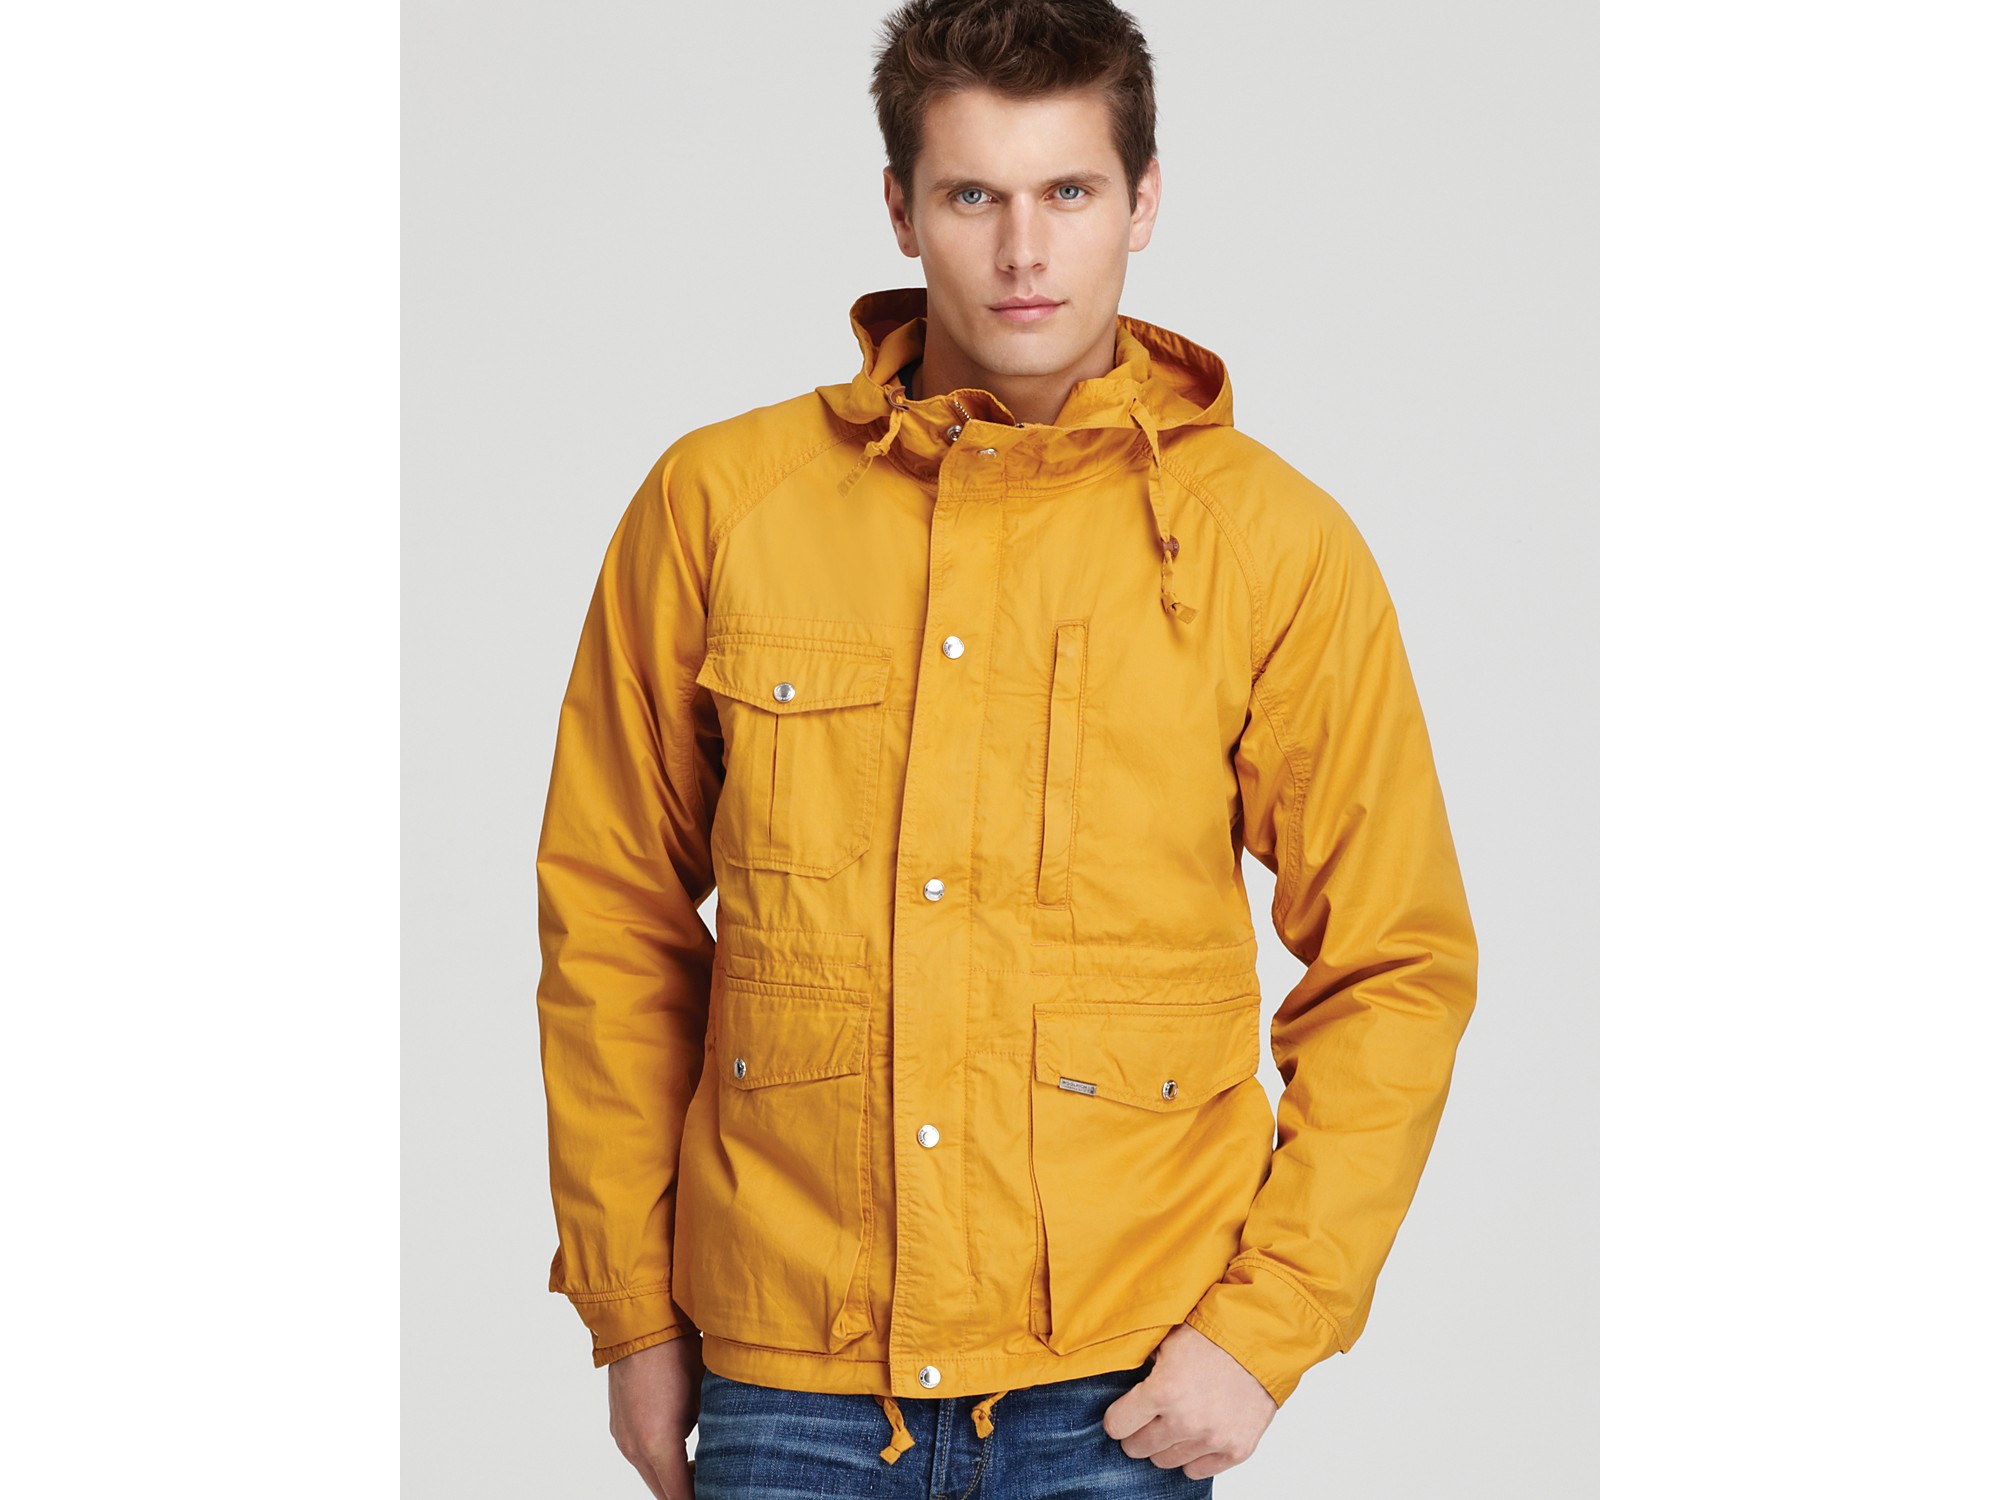 Woolrich Hooded Cargo Rain Jacket in Burnt Yellow (Yellow) for Men - Lyst